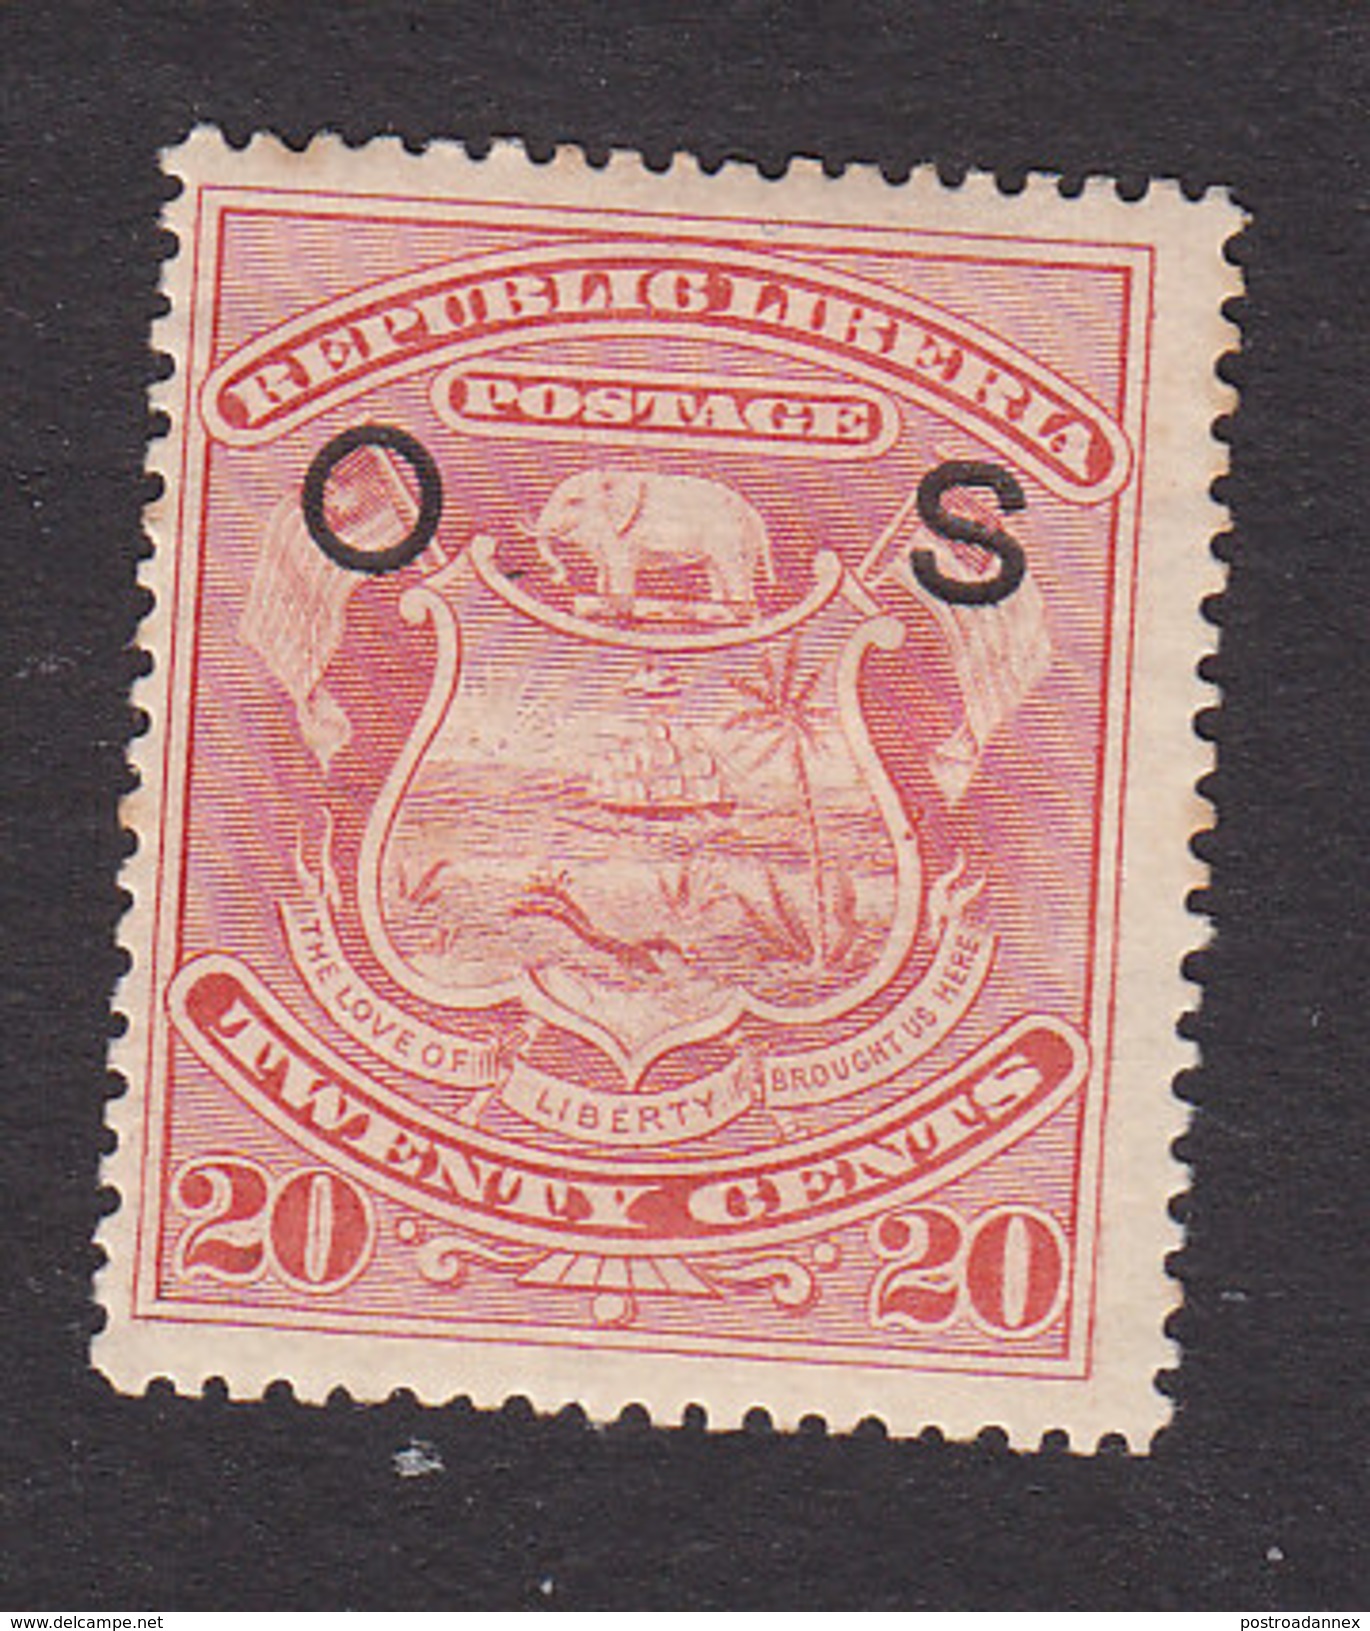 Liberia, Scott #O39, Mint Hinged, Coat Of Arms Overprinted, Issued 1898 - Liberia